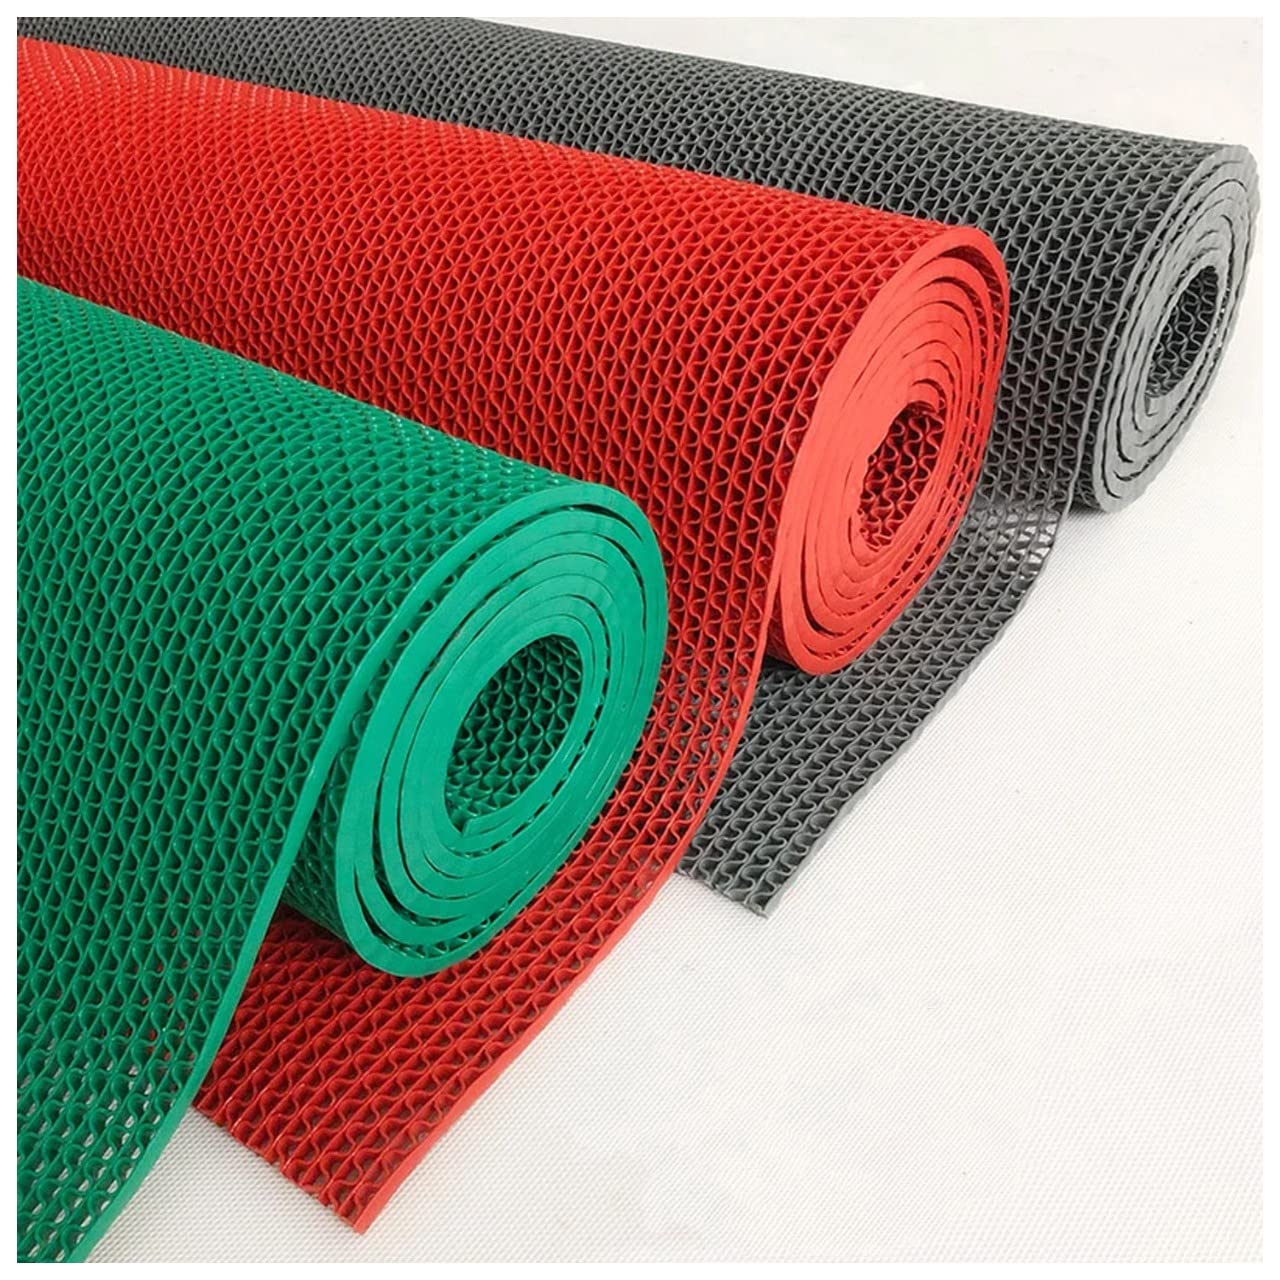 Anti-Skid mat Multipurpose Commercial PVC Floor Mat for Bathroom, Kitchen, Swimming Pool